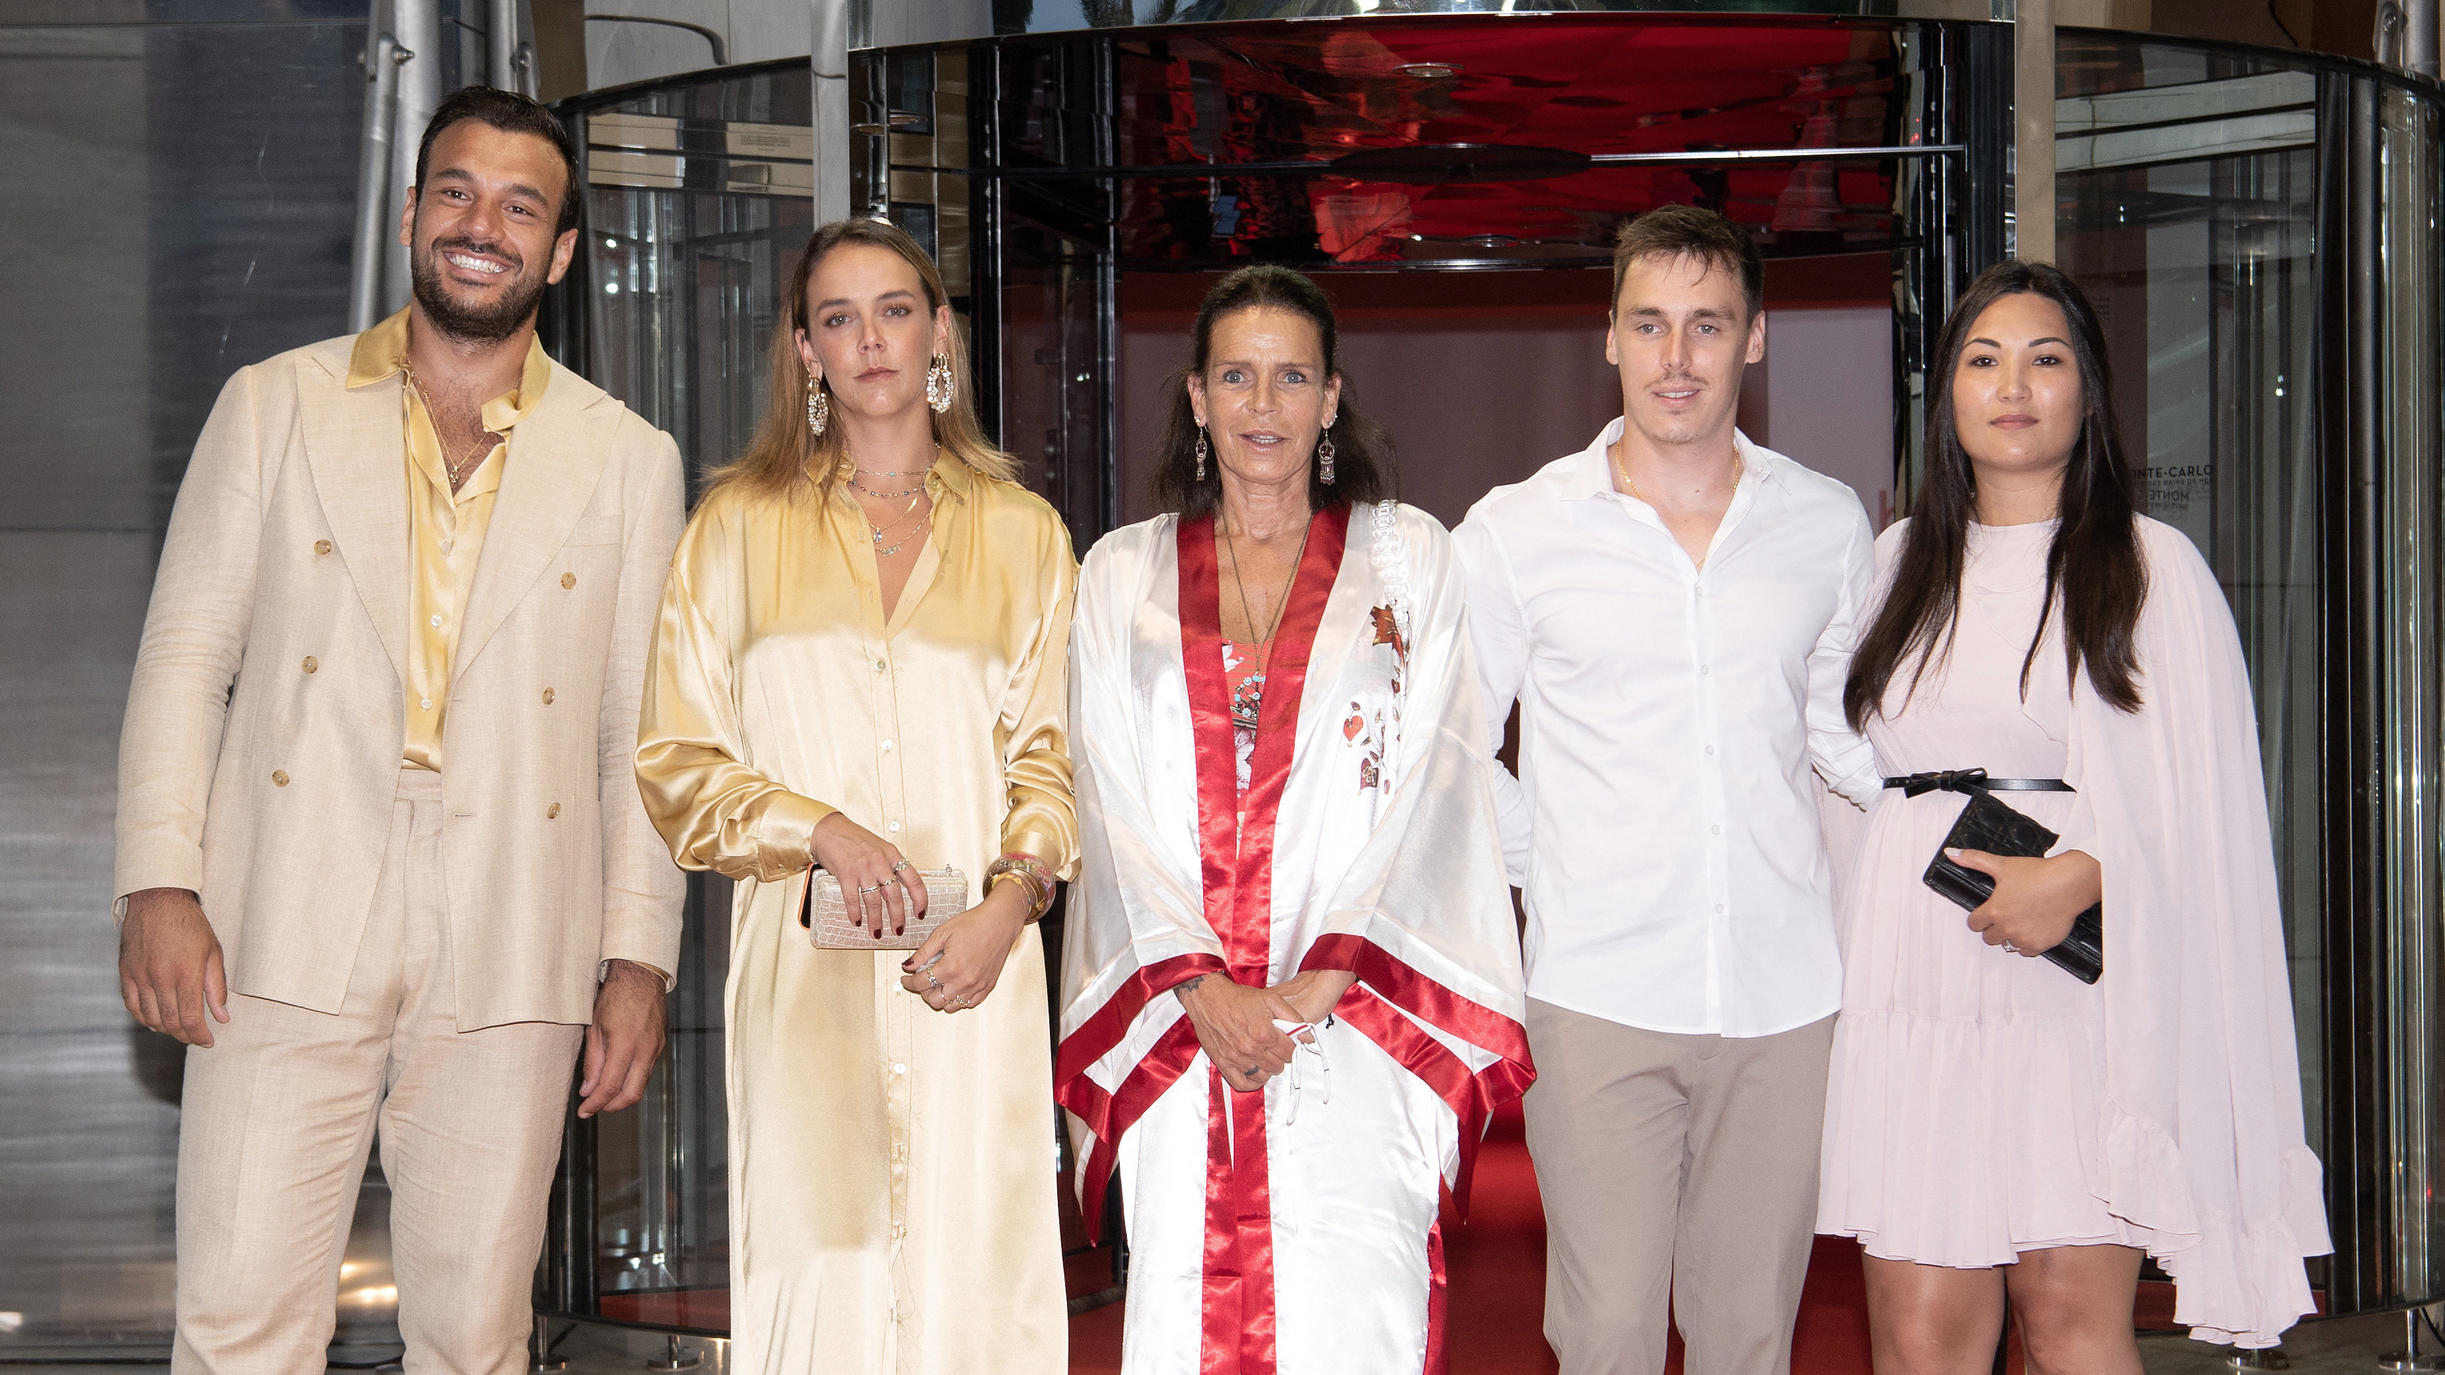 Pauline Ducruet, Maxime Giaccardi, Prinzessin Stéphanie von Monaco, Louis Ducruet and Ehefrau Marie Ducruet bei der "Fight Aids Gala" in Monte-Carlo im Juli 2021.